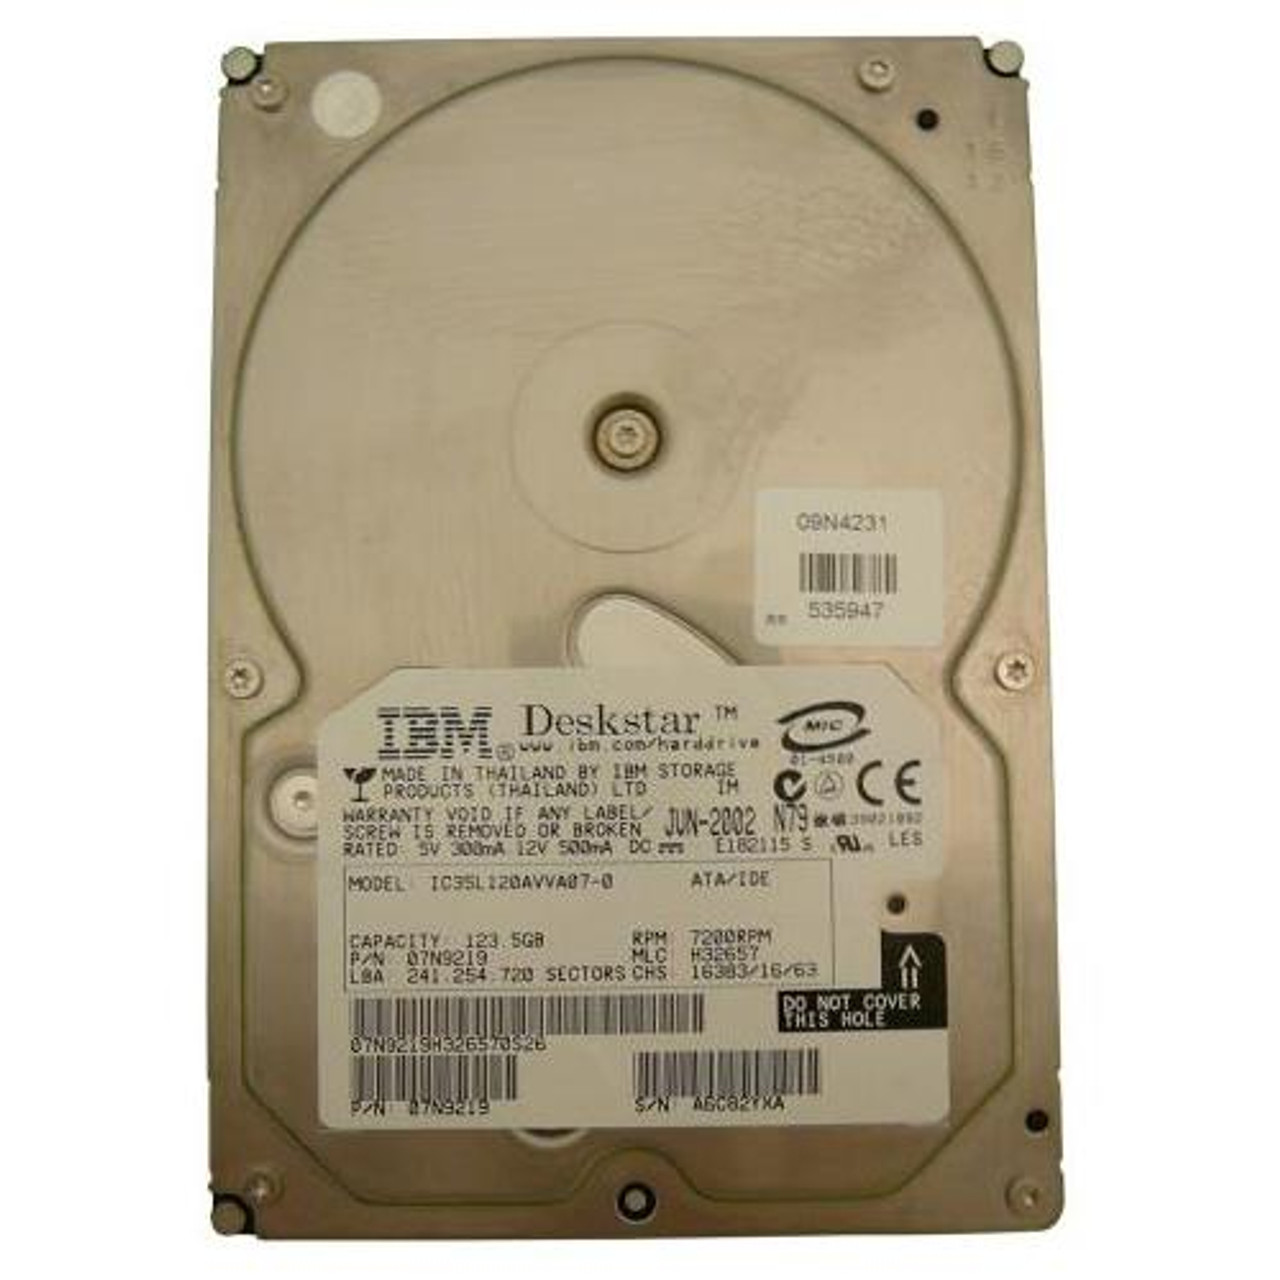 09N4231 IBM ATA-100 120GB Hard Drive